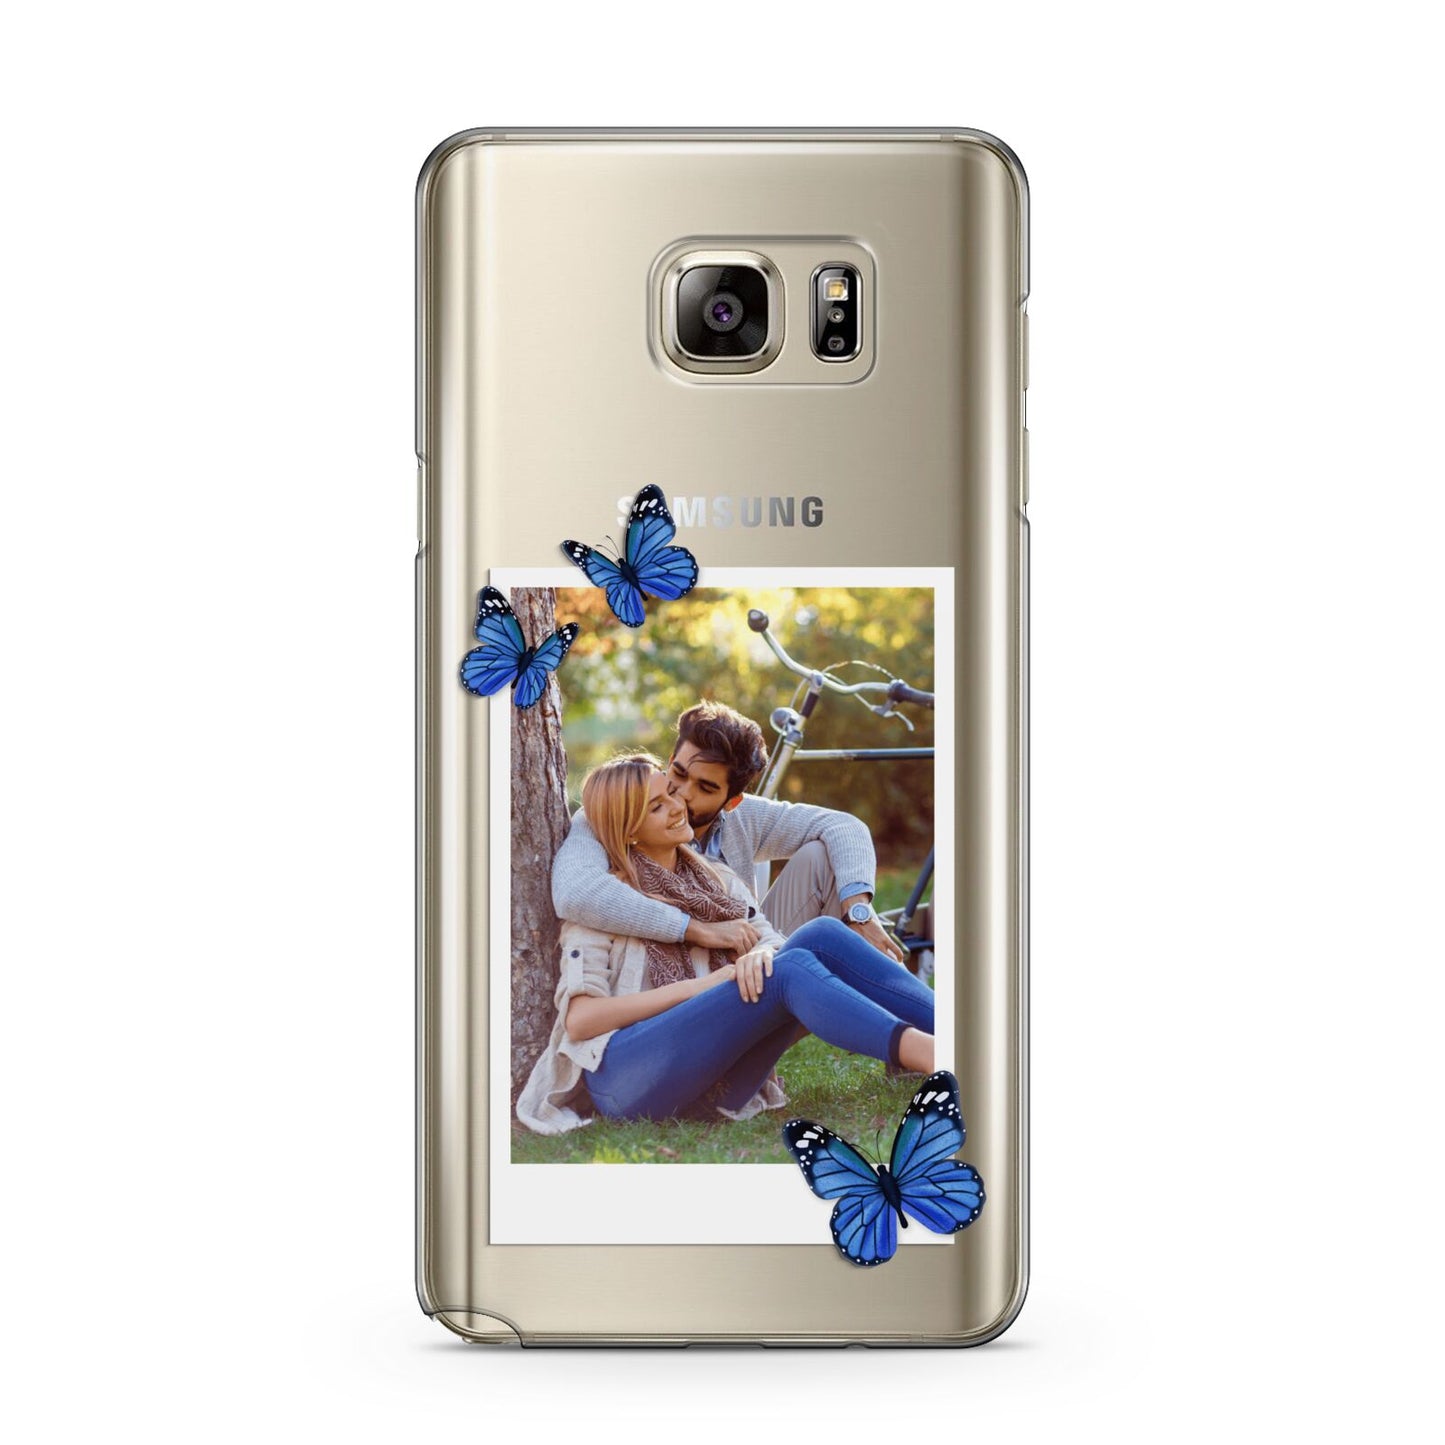 Polaroid Photo Samsung Galaxy Note 5 Case